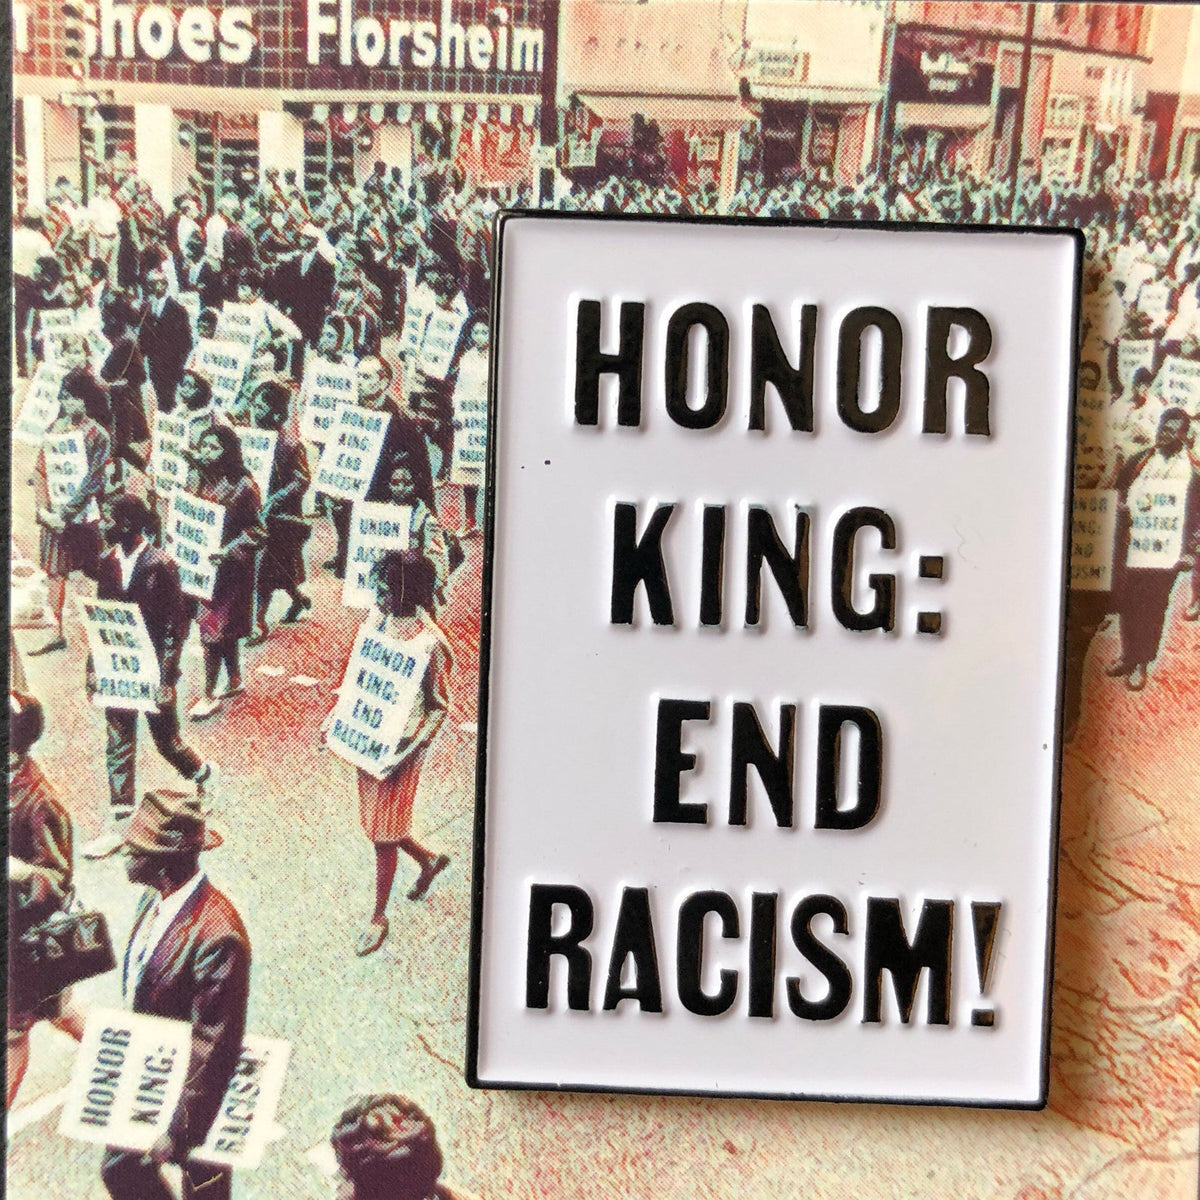 Honor King: End Racism! - Soft Enamel Pin